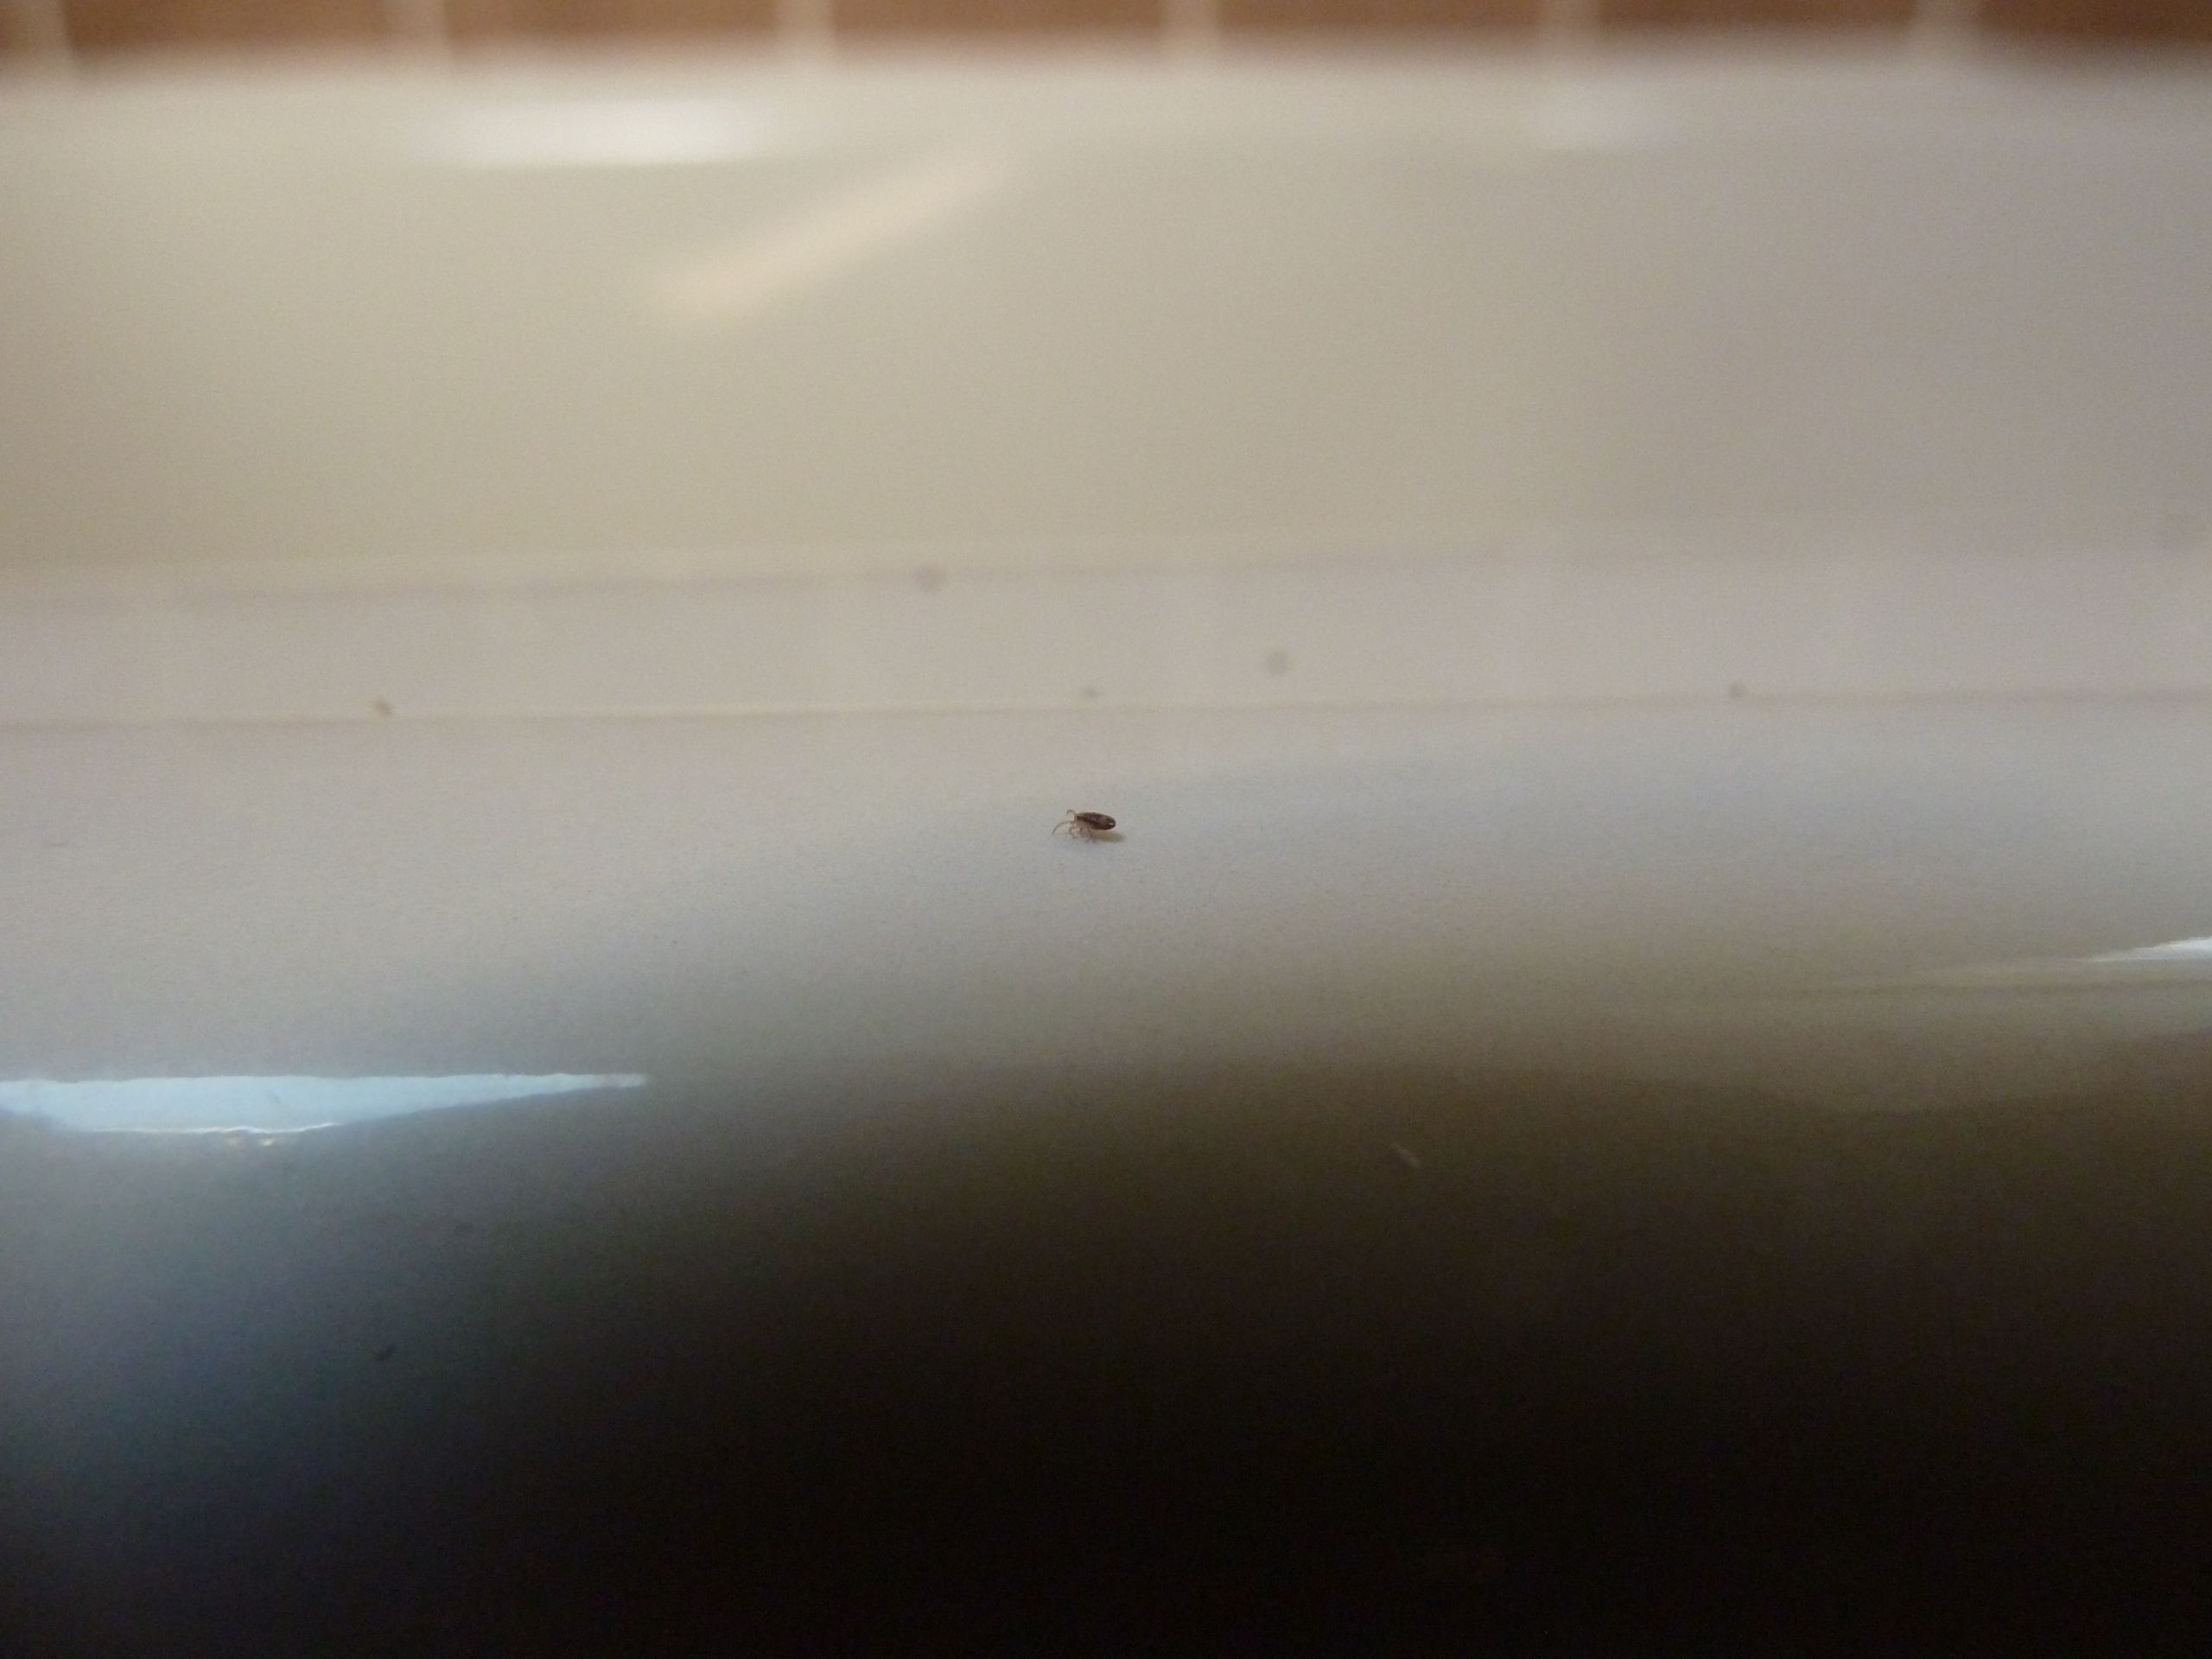 Small Black Flies In Bathroom
 Tiny Black Bugs In Bathroom